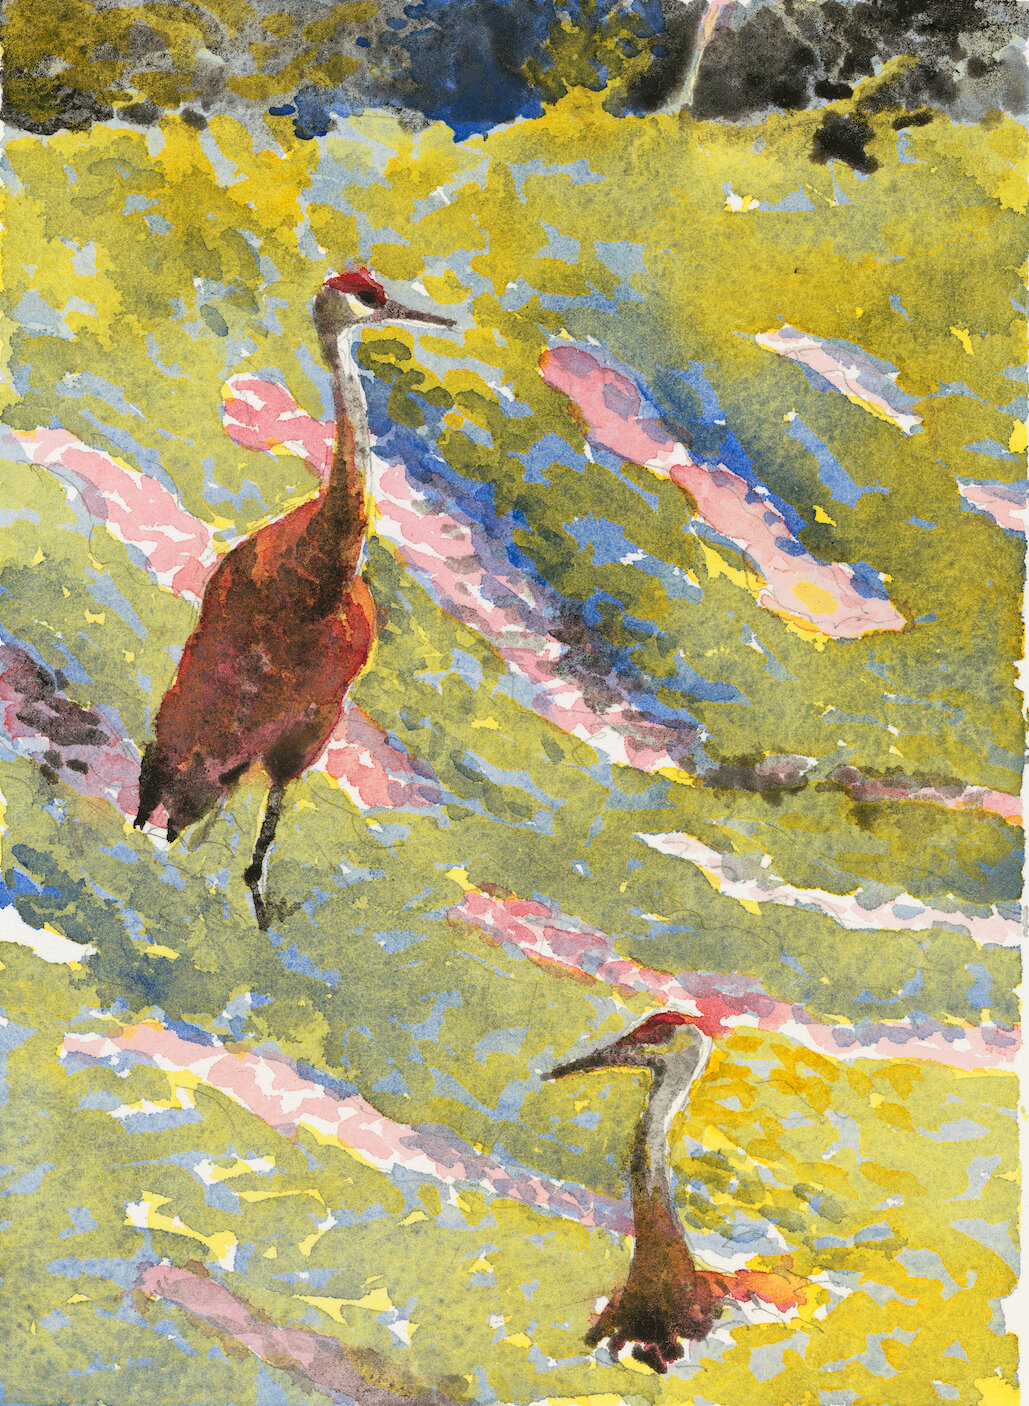 Sandhill Cranes in Soybean Field